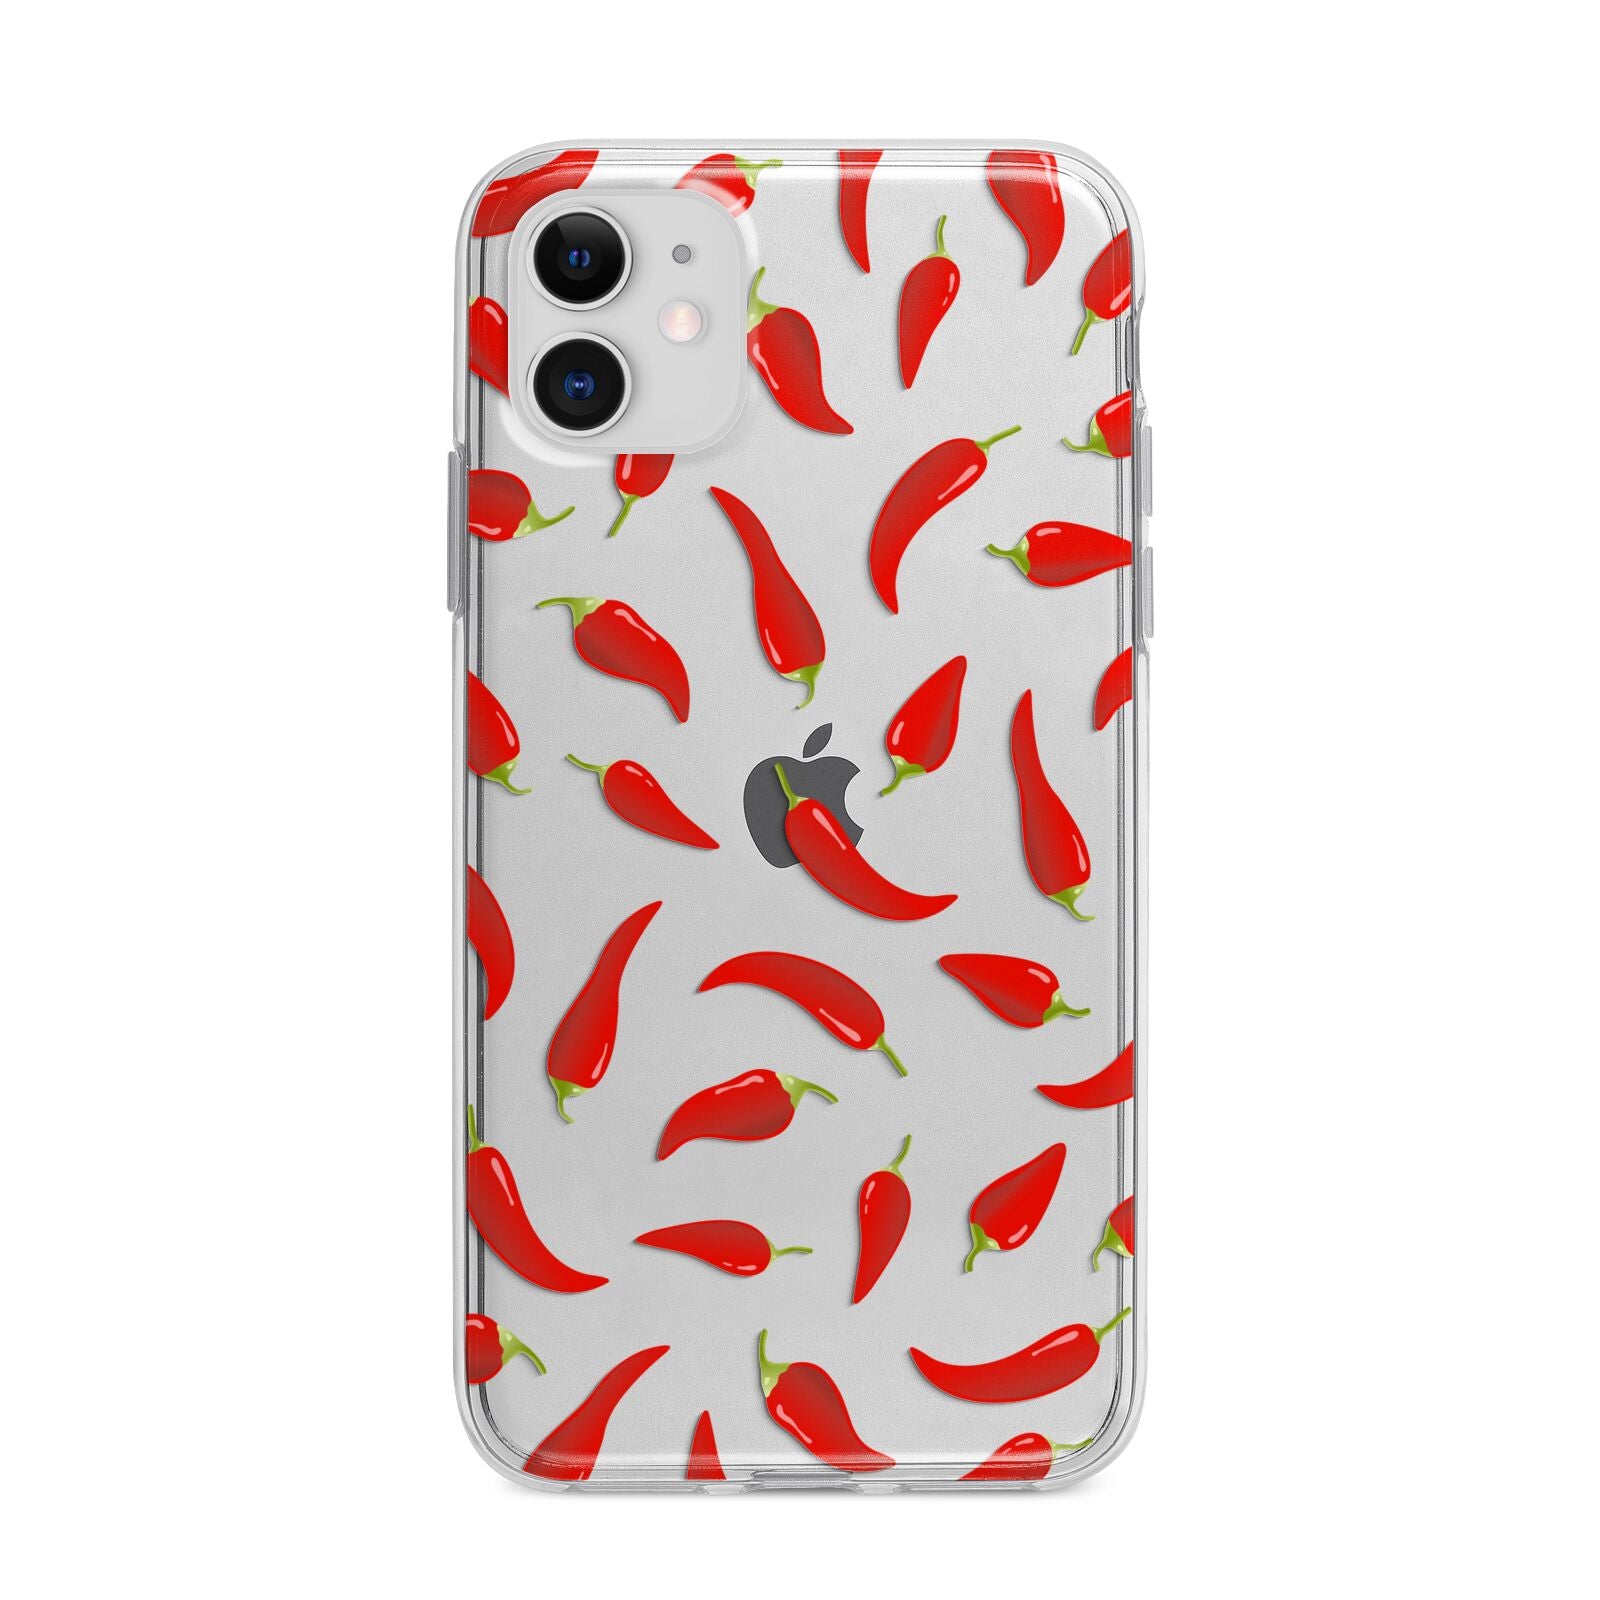 Chilli Pepper Apple iPhone 11 in White with Bumper Case